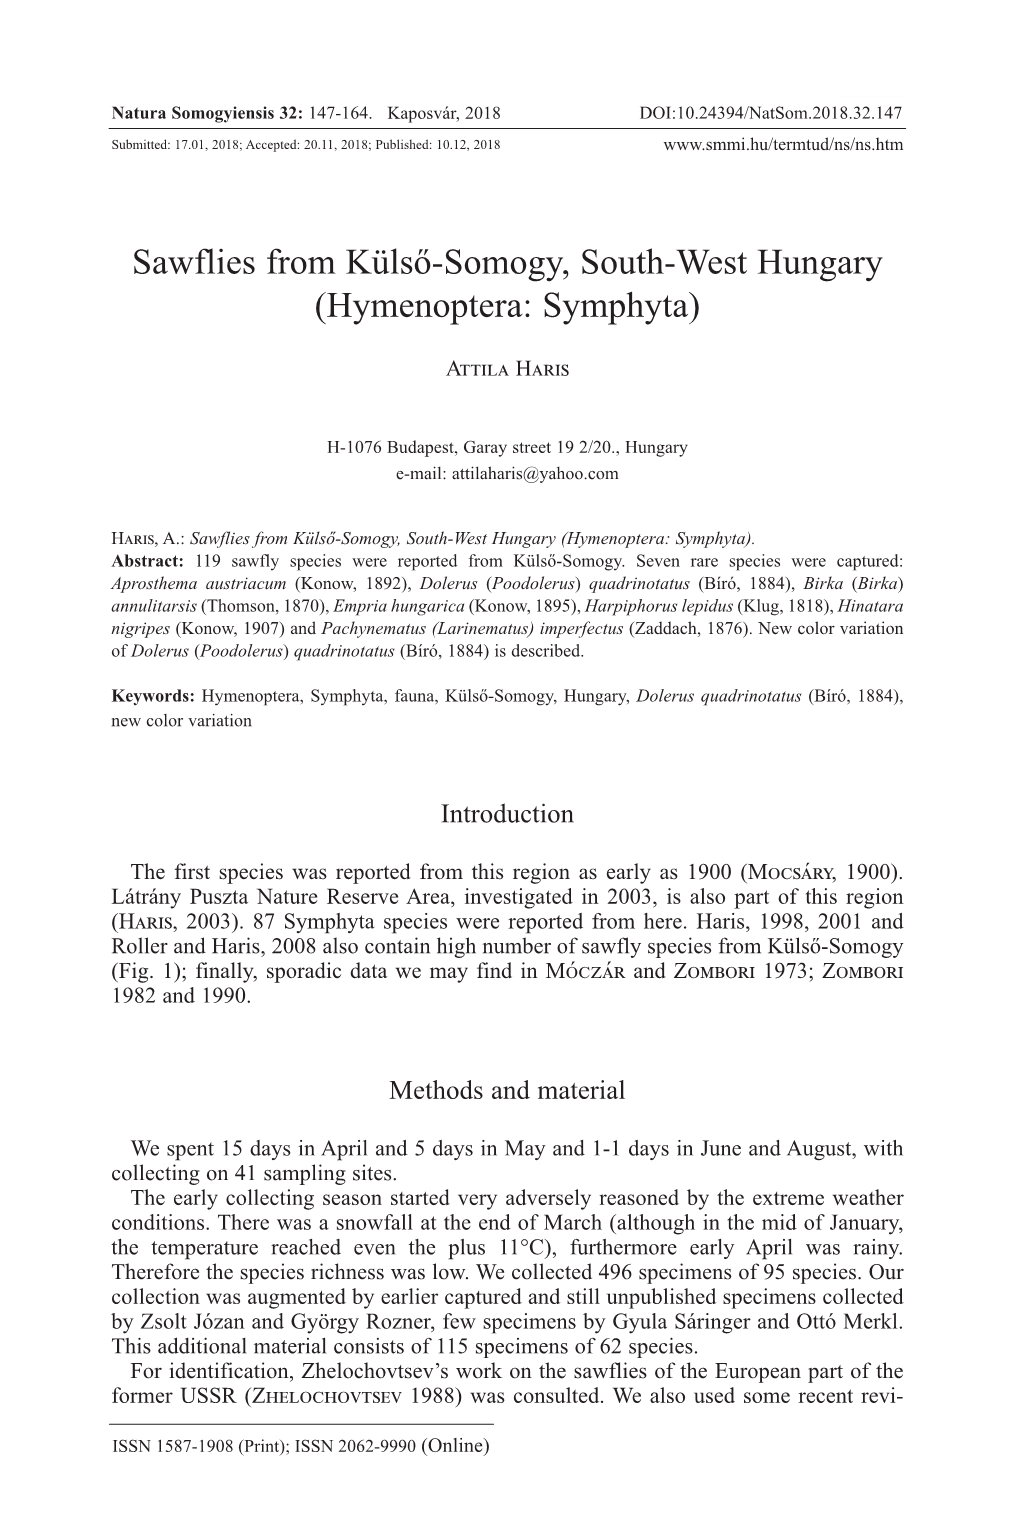 Sawflies from Külső-Somogy, South-West Hungary (Hymenoptera: Symphyta)